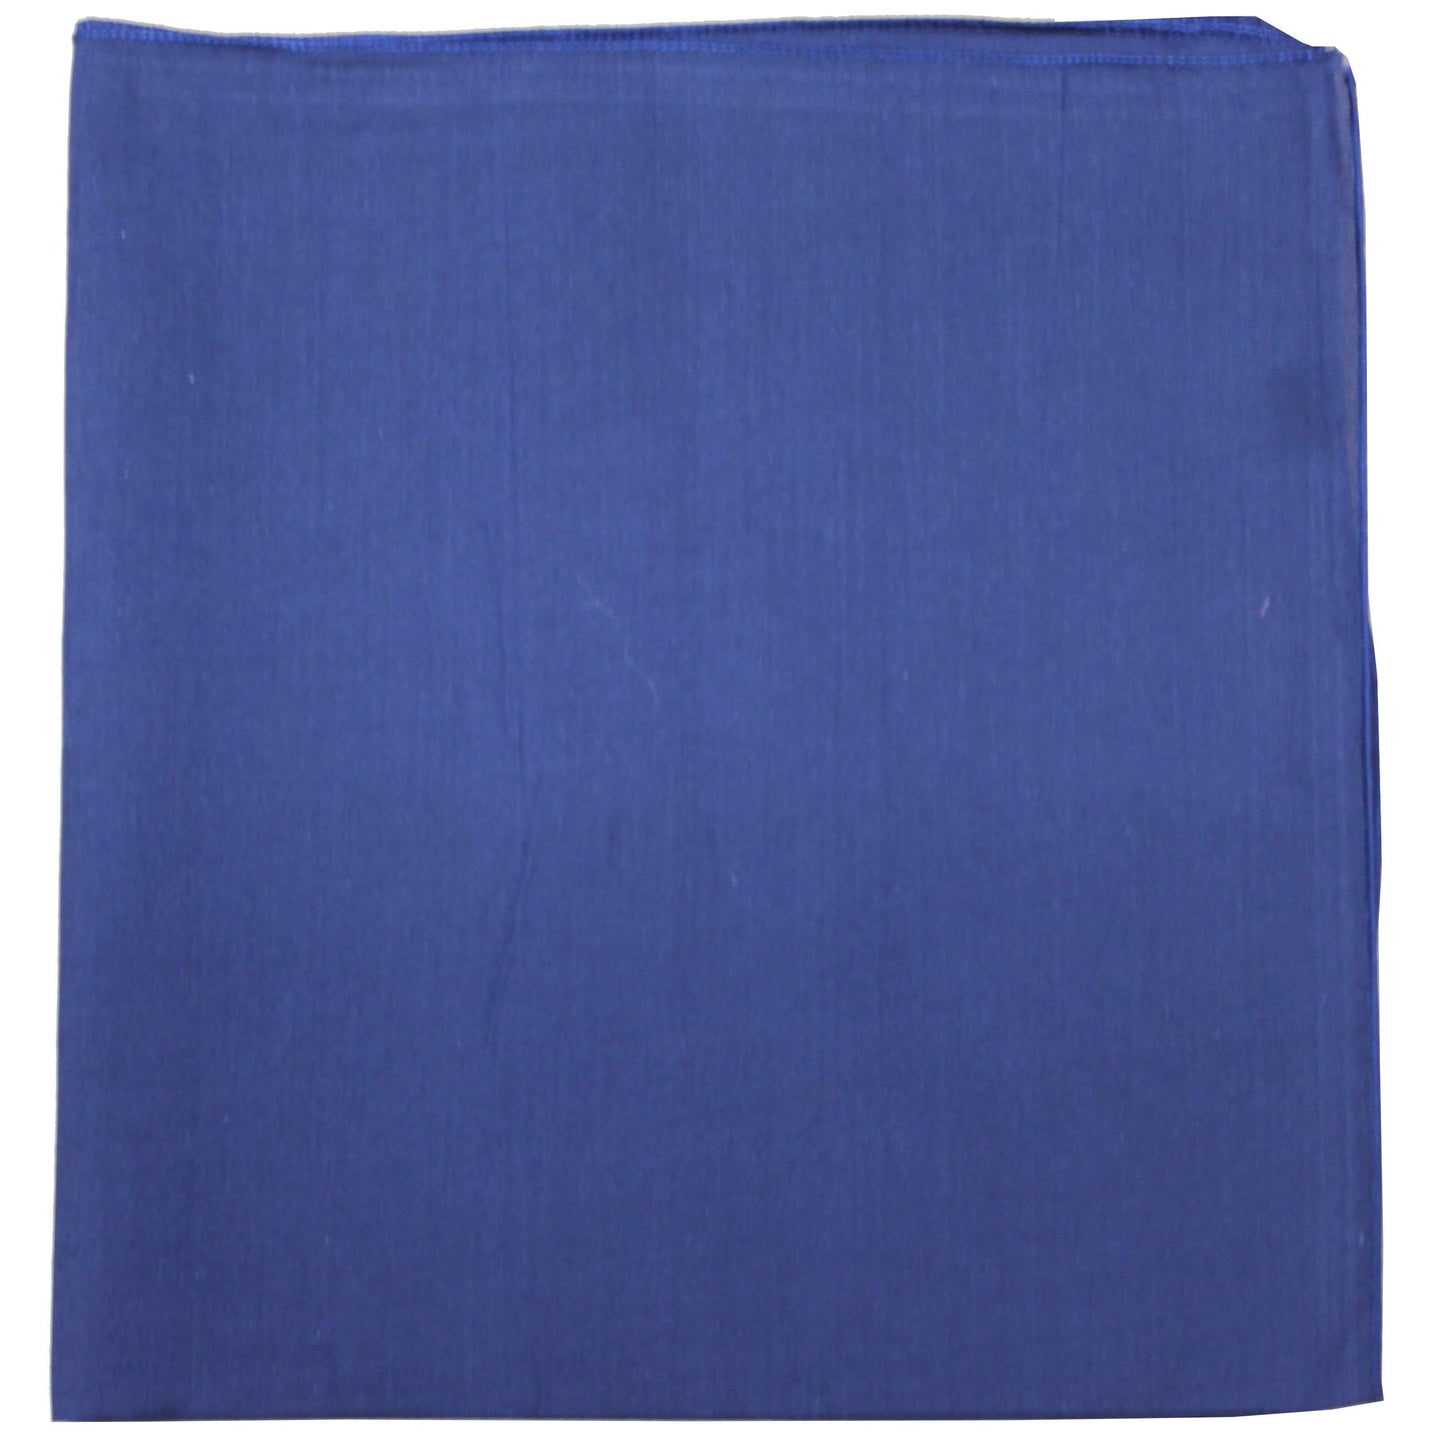 Unibasic Solid colors Cotton Bandana, head wrap, handkerchief - 18 Pack